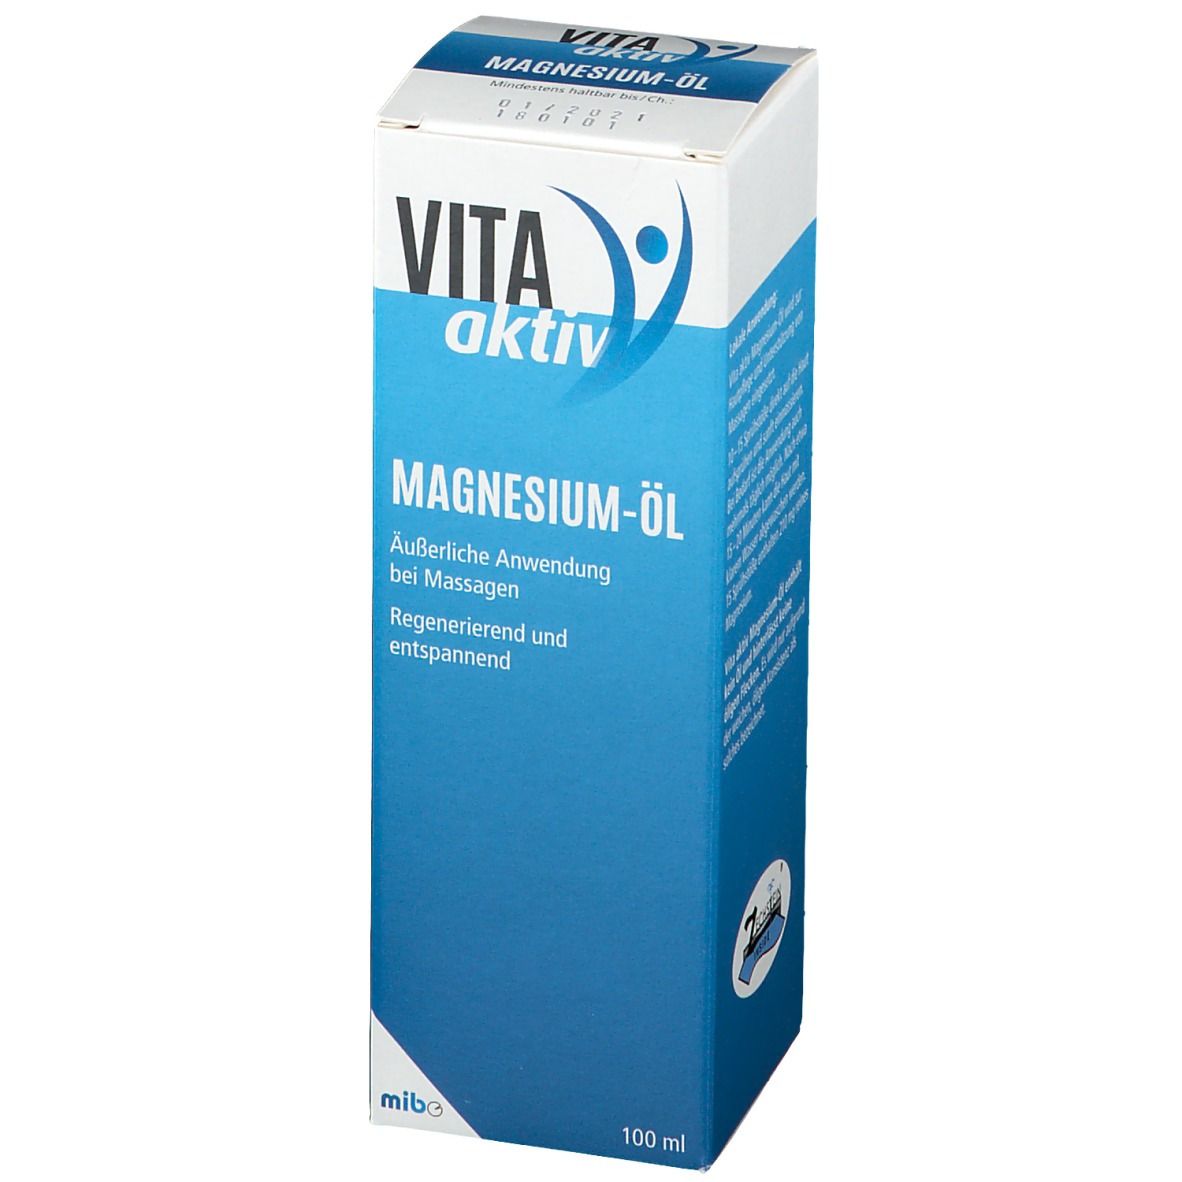 Vita aktiv Magnesium-Öl